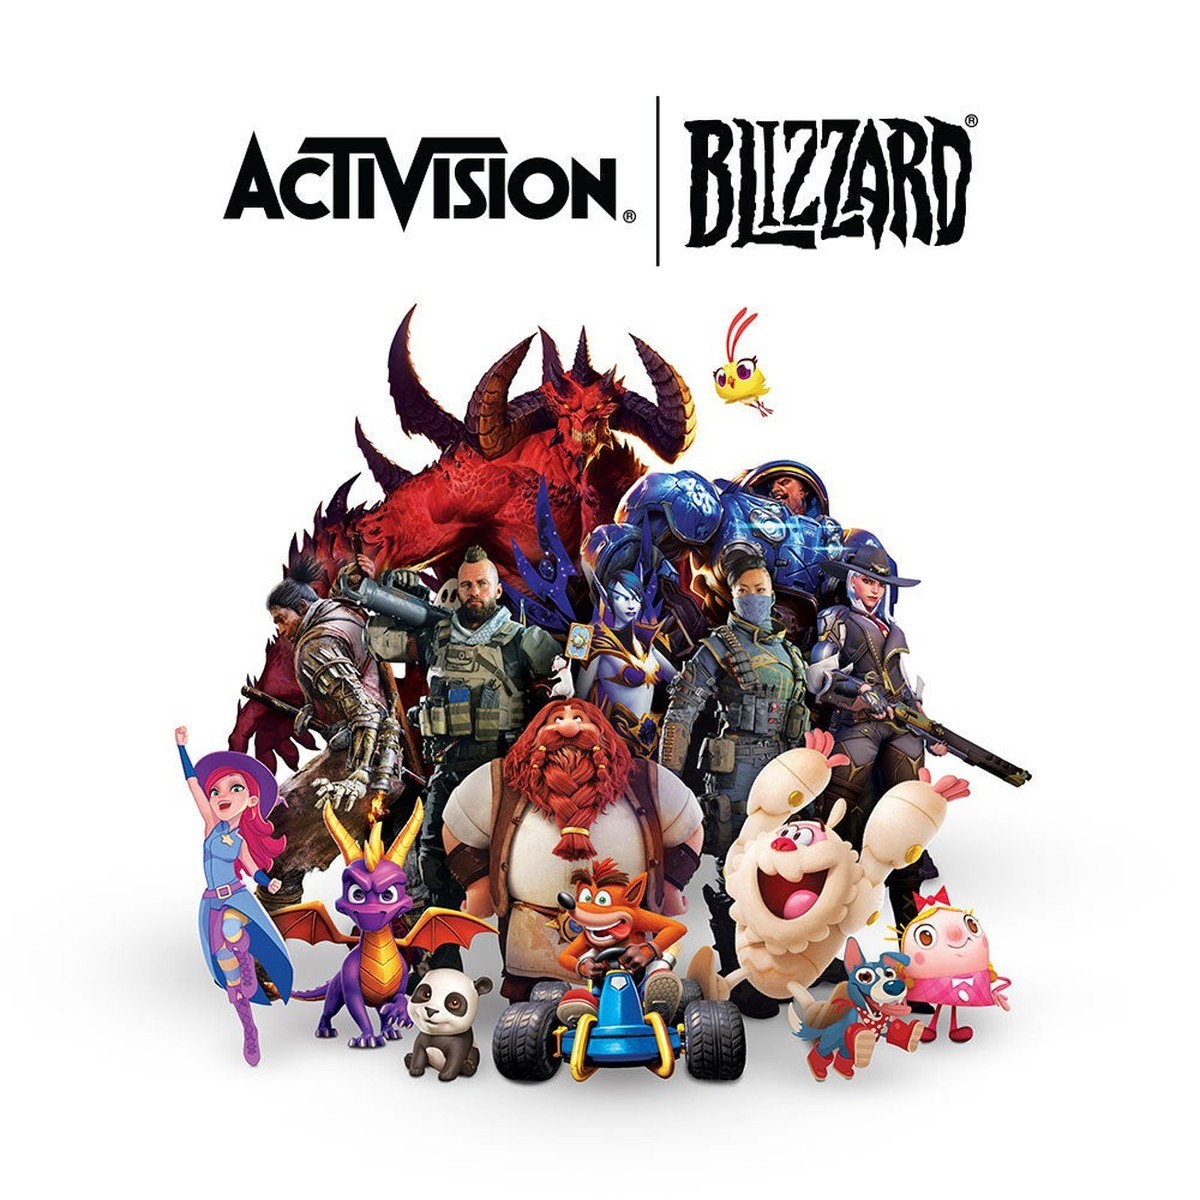 Activision Blizzard 內部審查報告指出「沒有證據」顯示該公司有忽略或淡化性騷擾一事